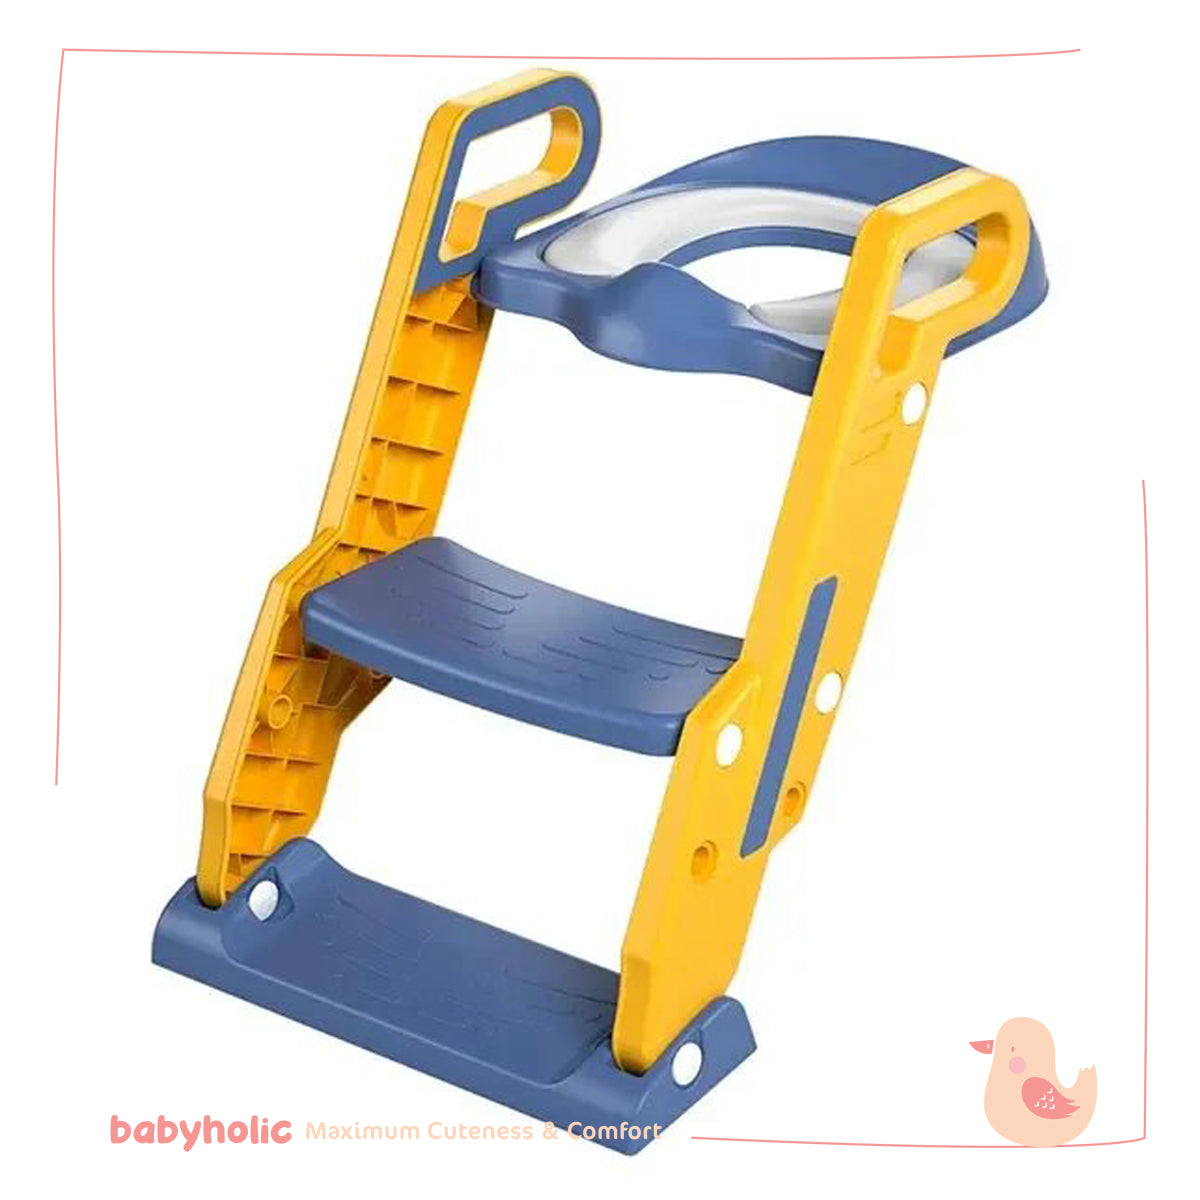 Children's toilet chair and ladder